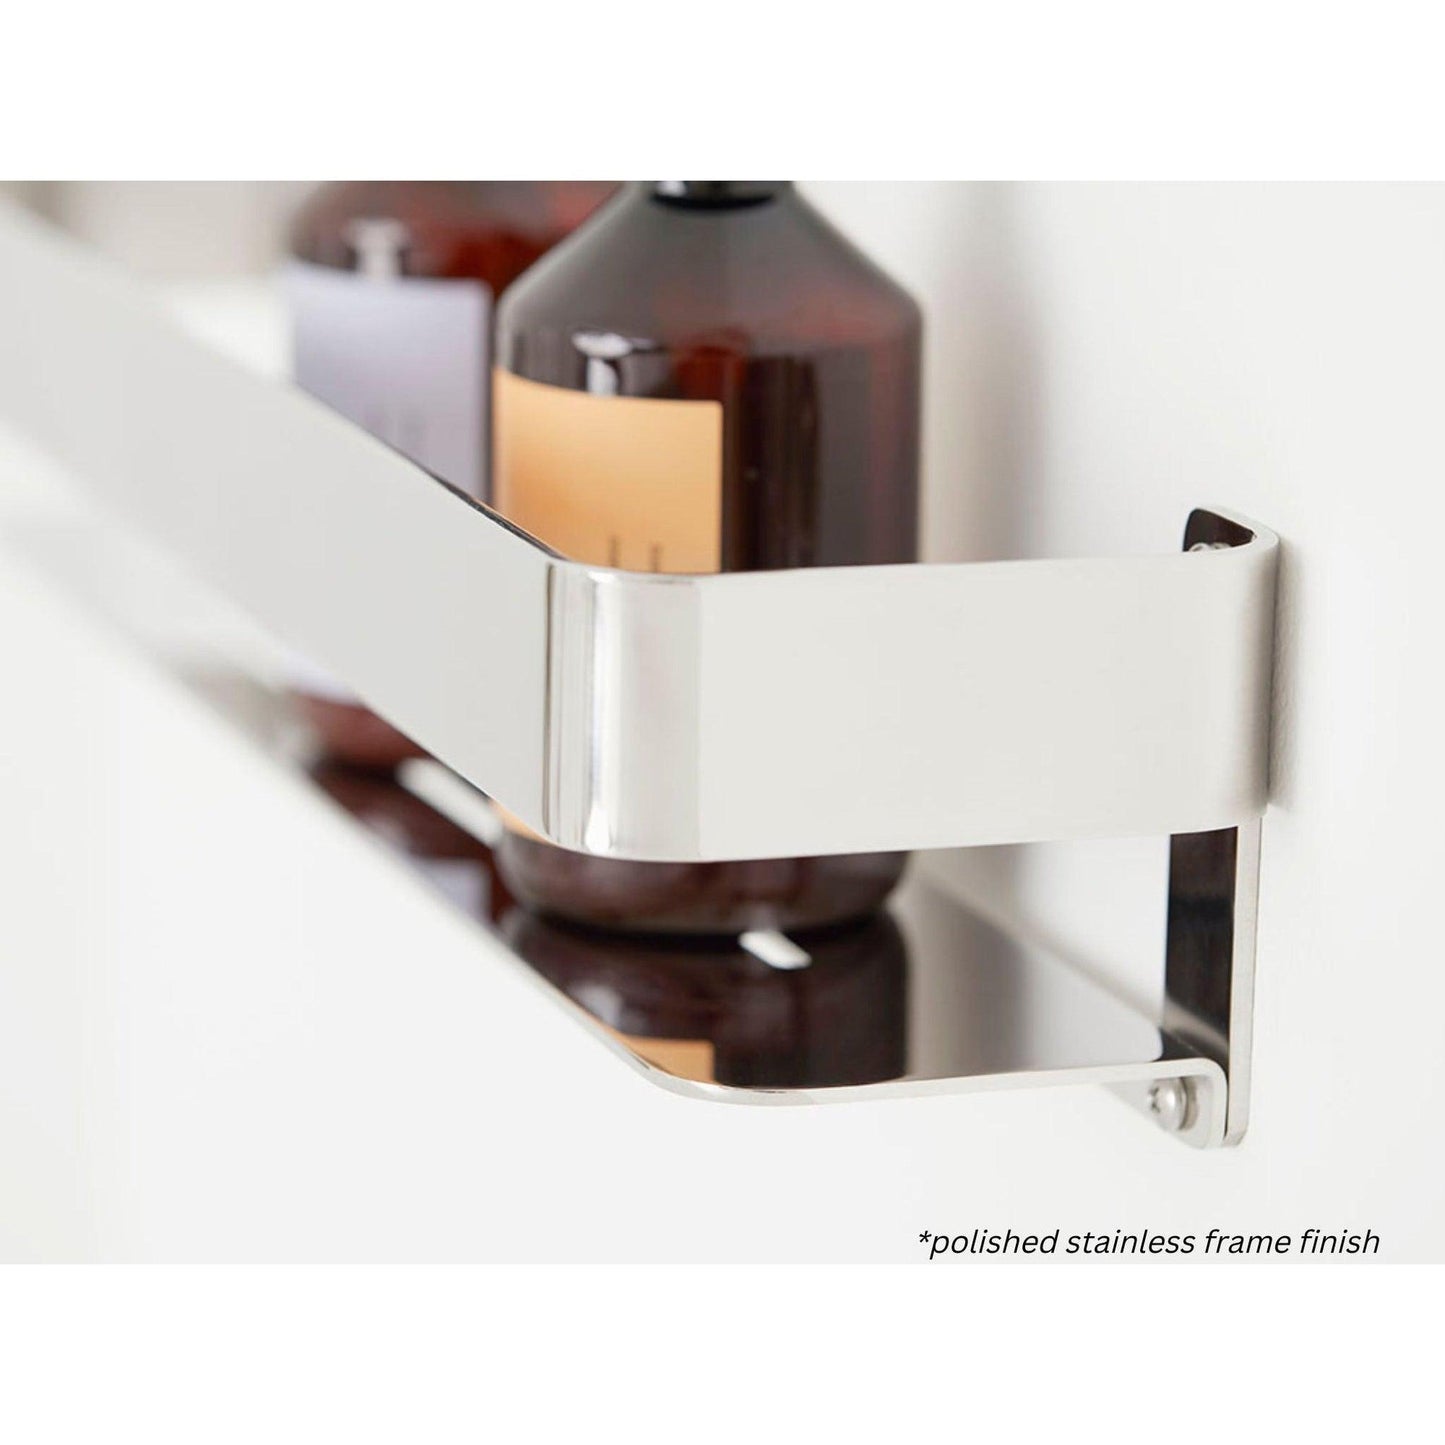 Seachrome Coronado 700 Series 18" x 4" Rectangular Shower Shelf With Rail in Satin Brass Powder Coated Stainless Steel Finish